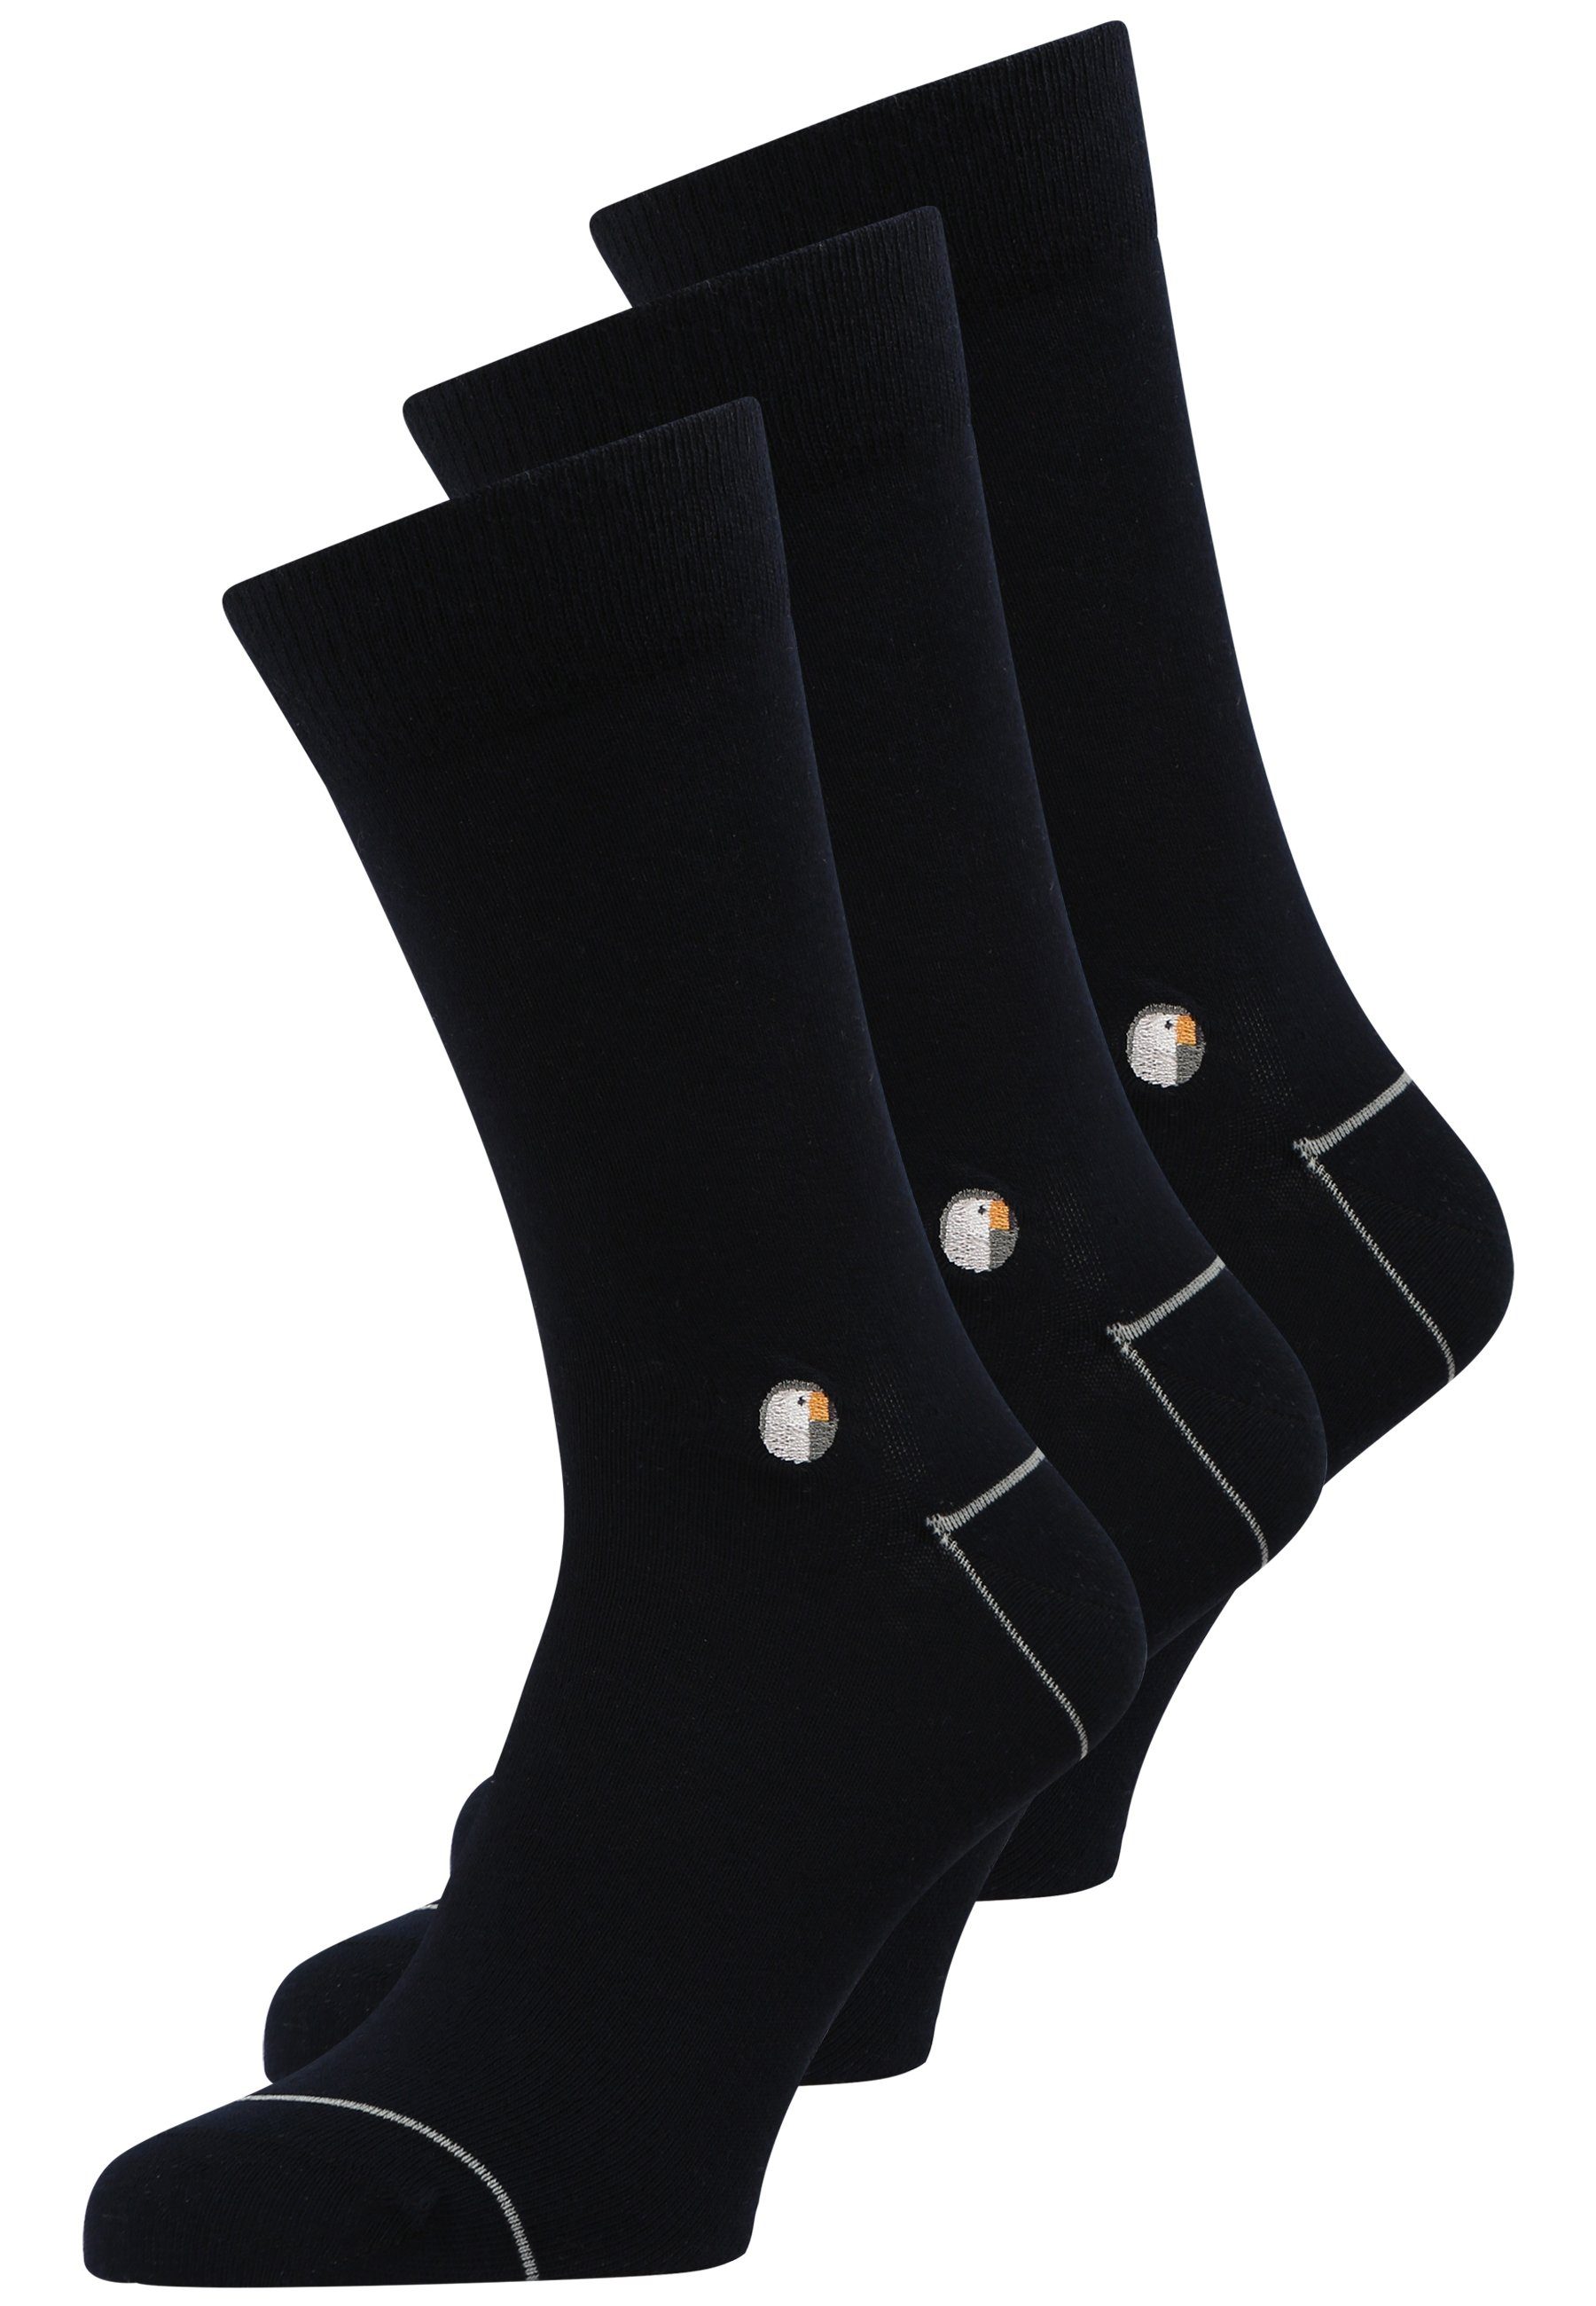 Sokid Socken Set 3 3er Pack (3-Paar) GOTS zertifizierte Bio-Baumwolle